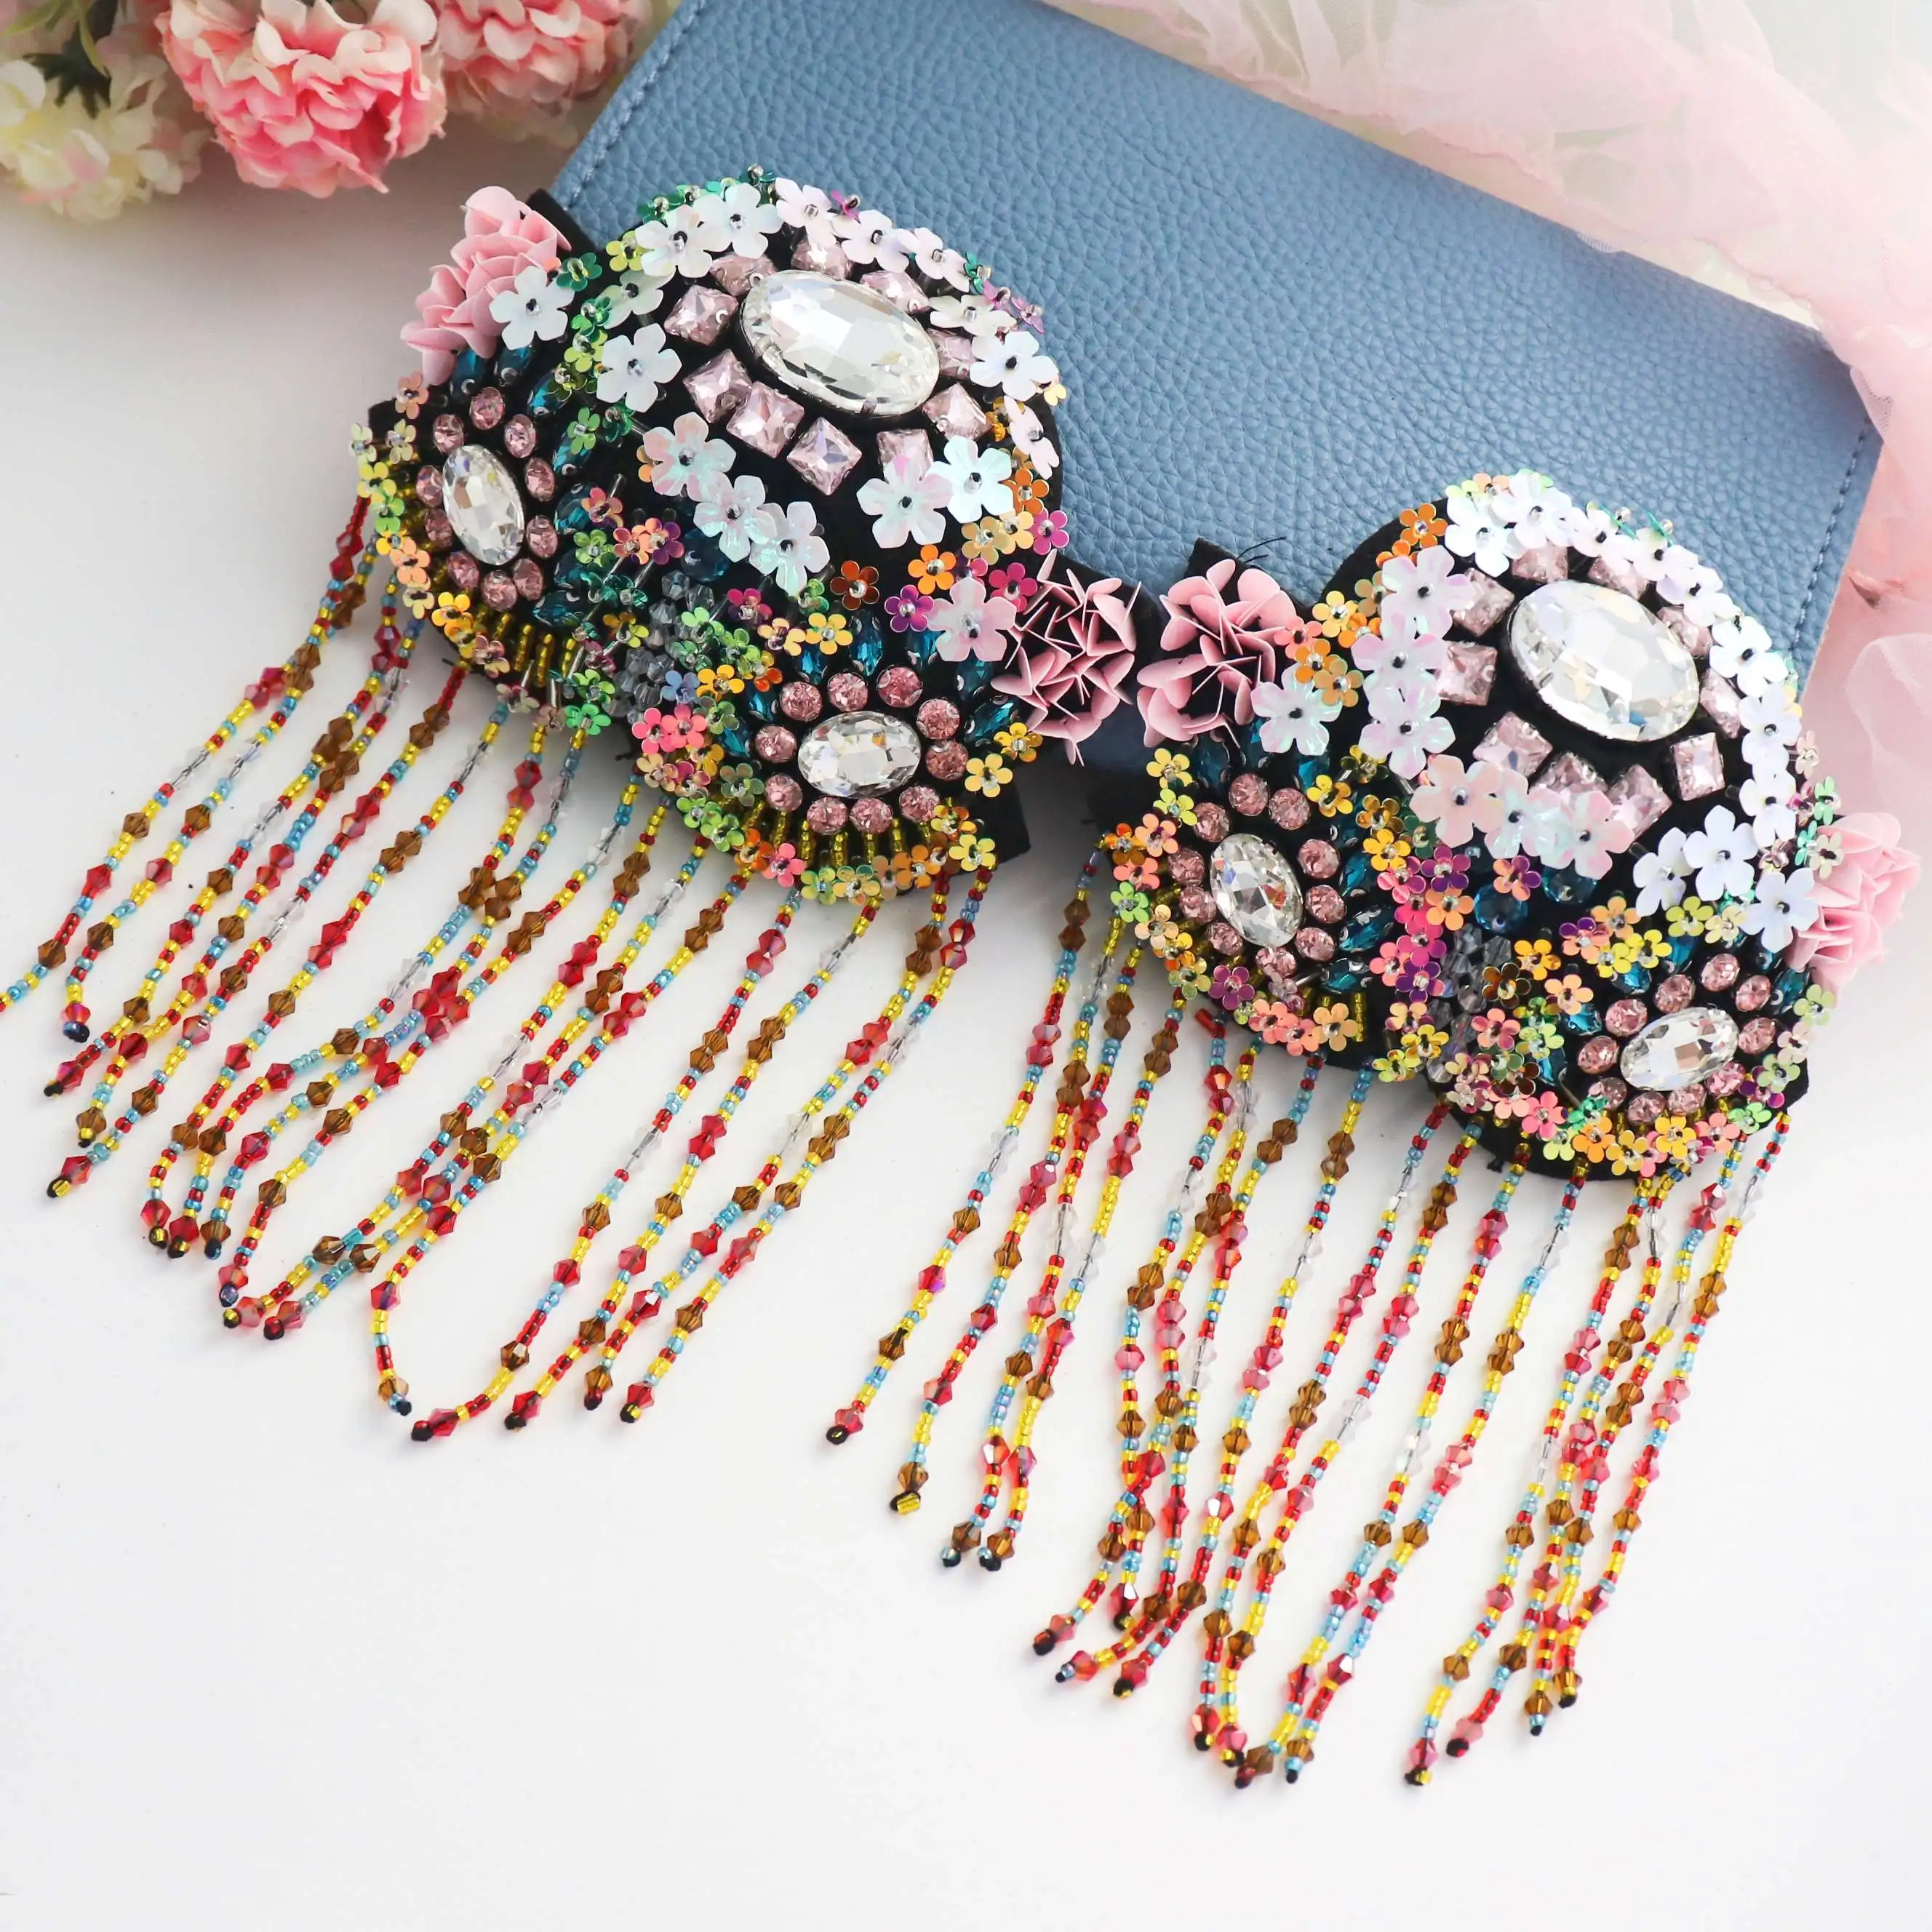 Heavy industry handmade beads colorful flowers tassel epaulets fur coat decoration cloth decals applique DIY accessories